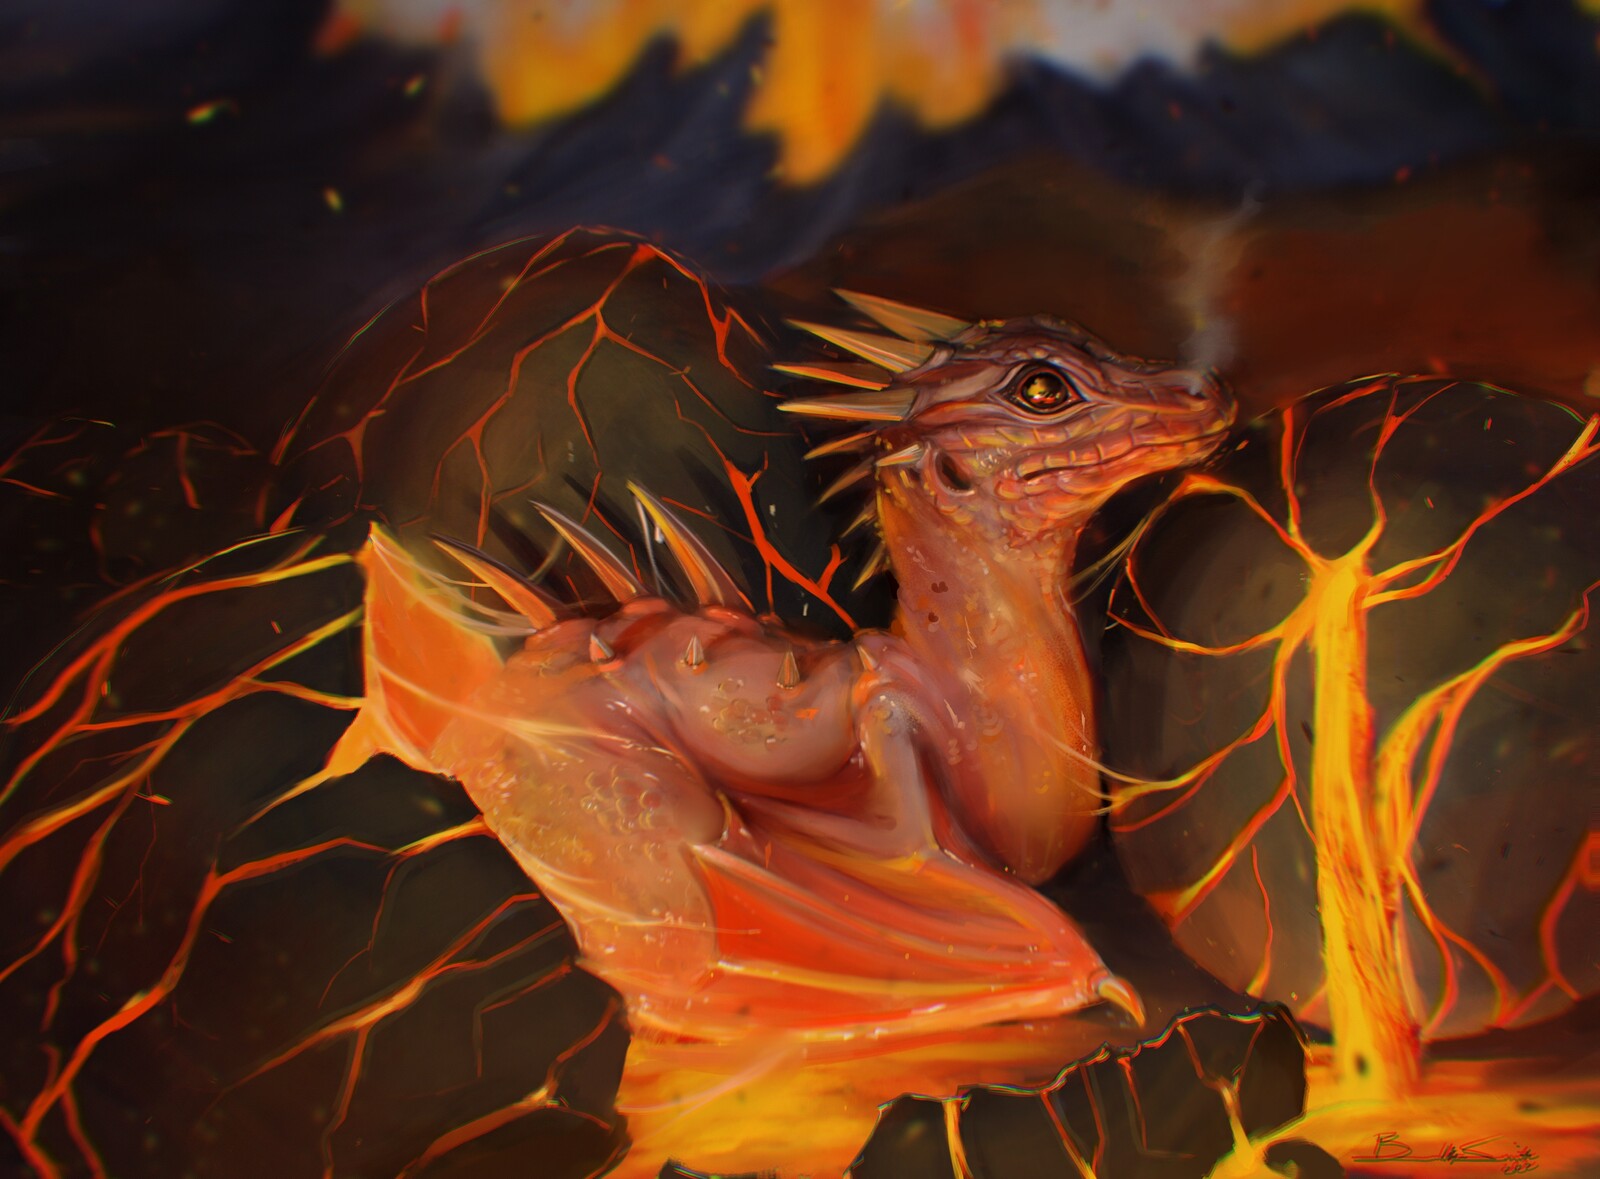 Baby fire dragon